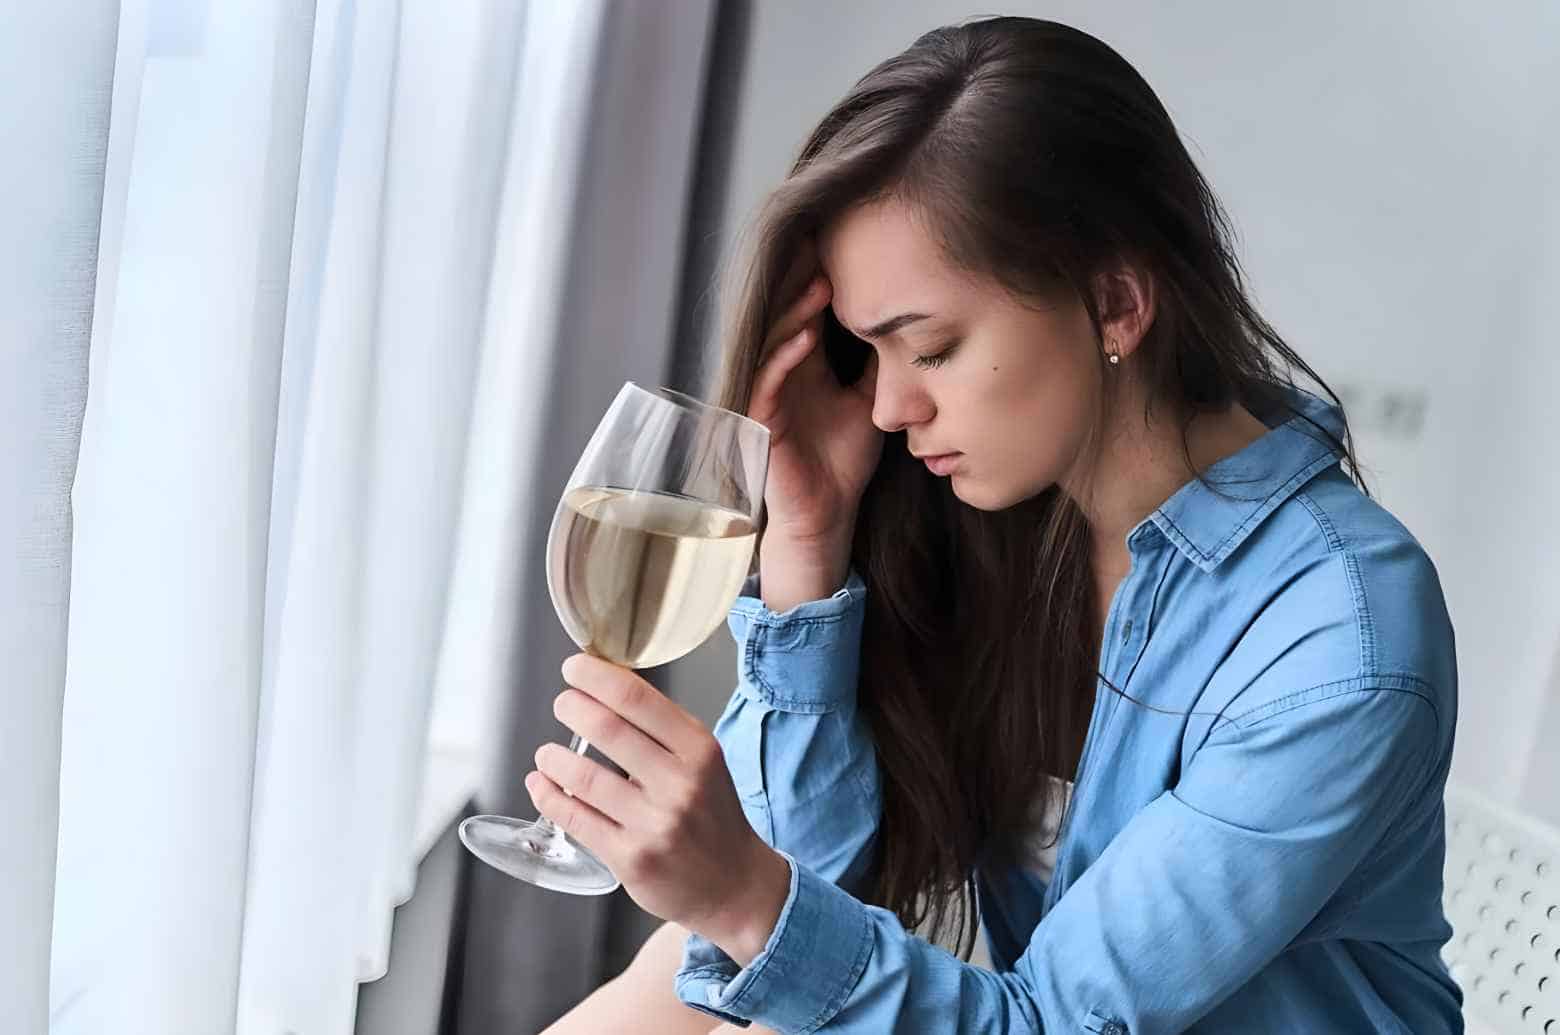 Causes of Wine Hangovers